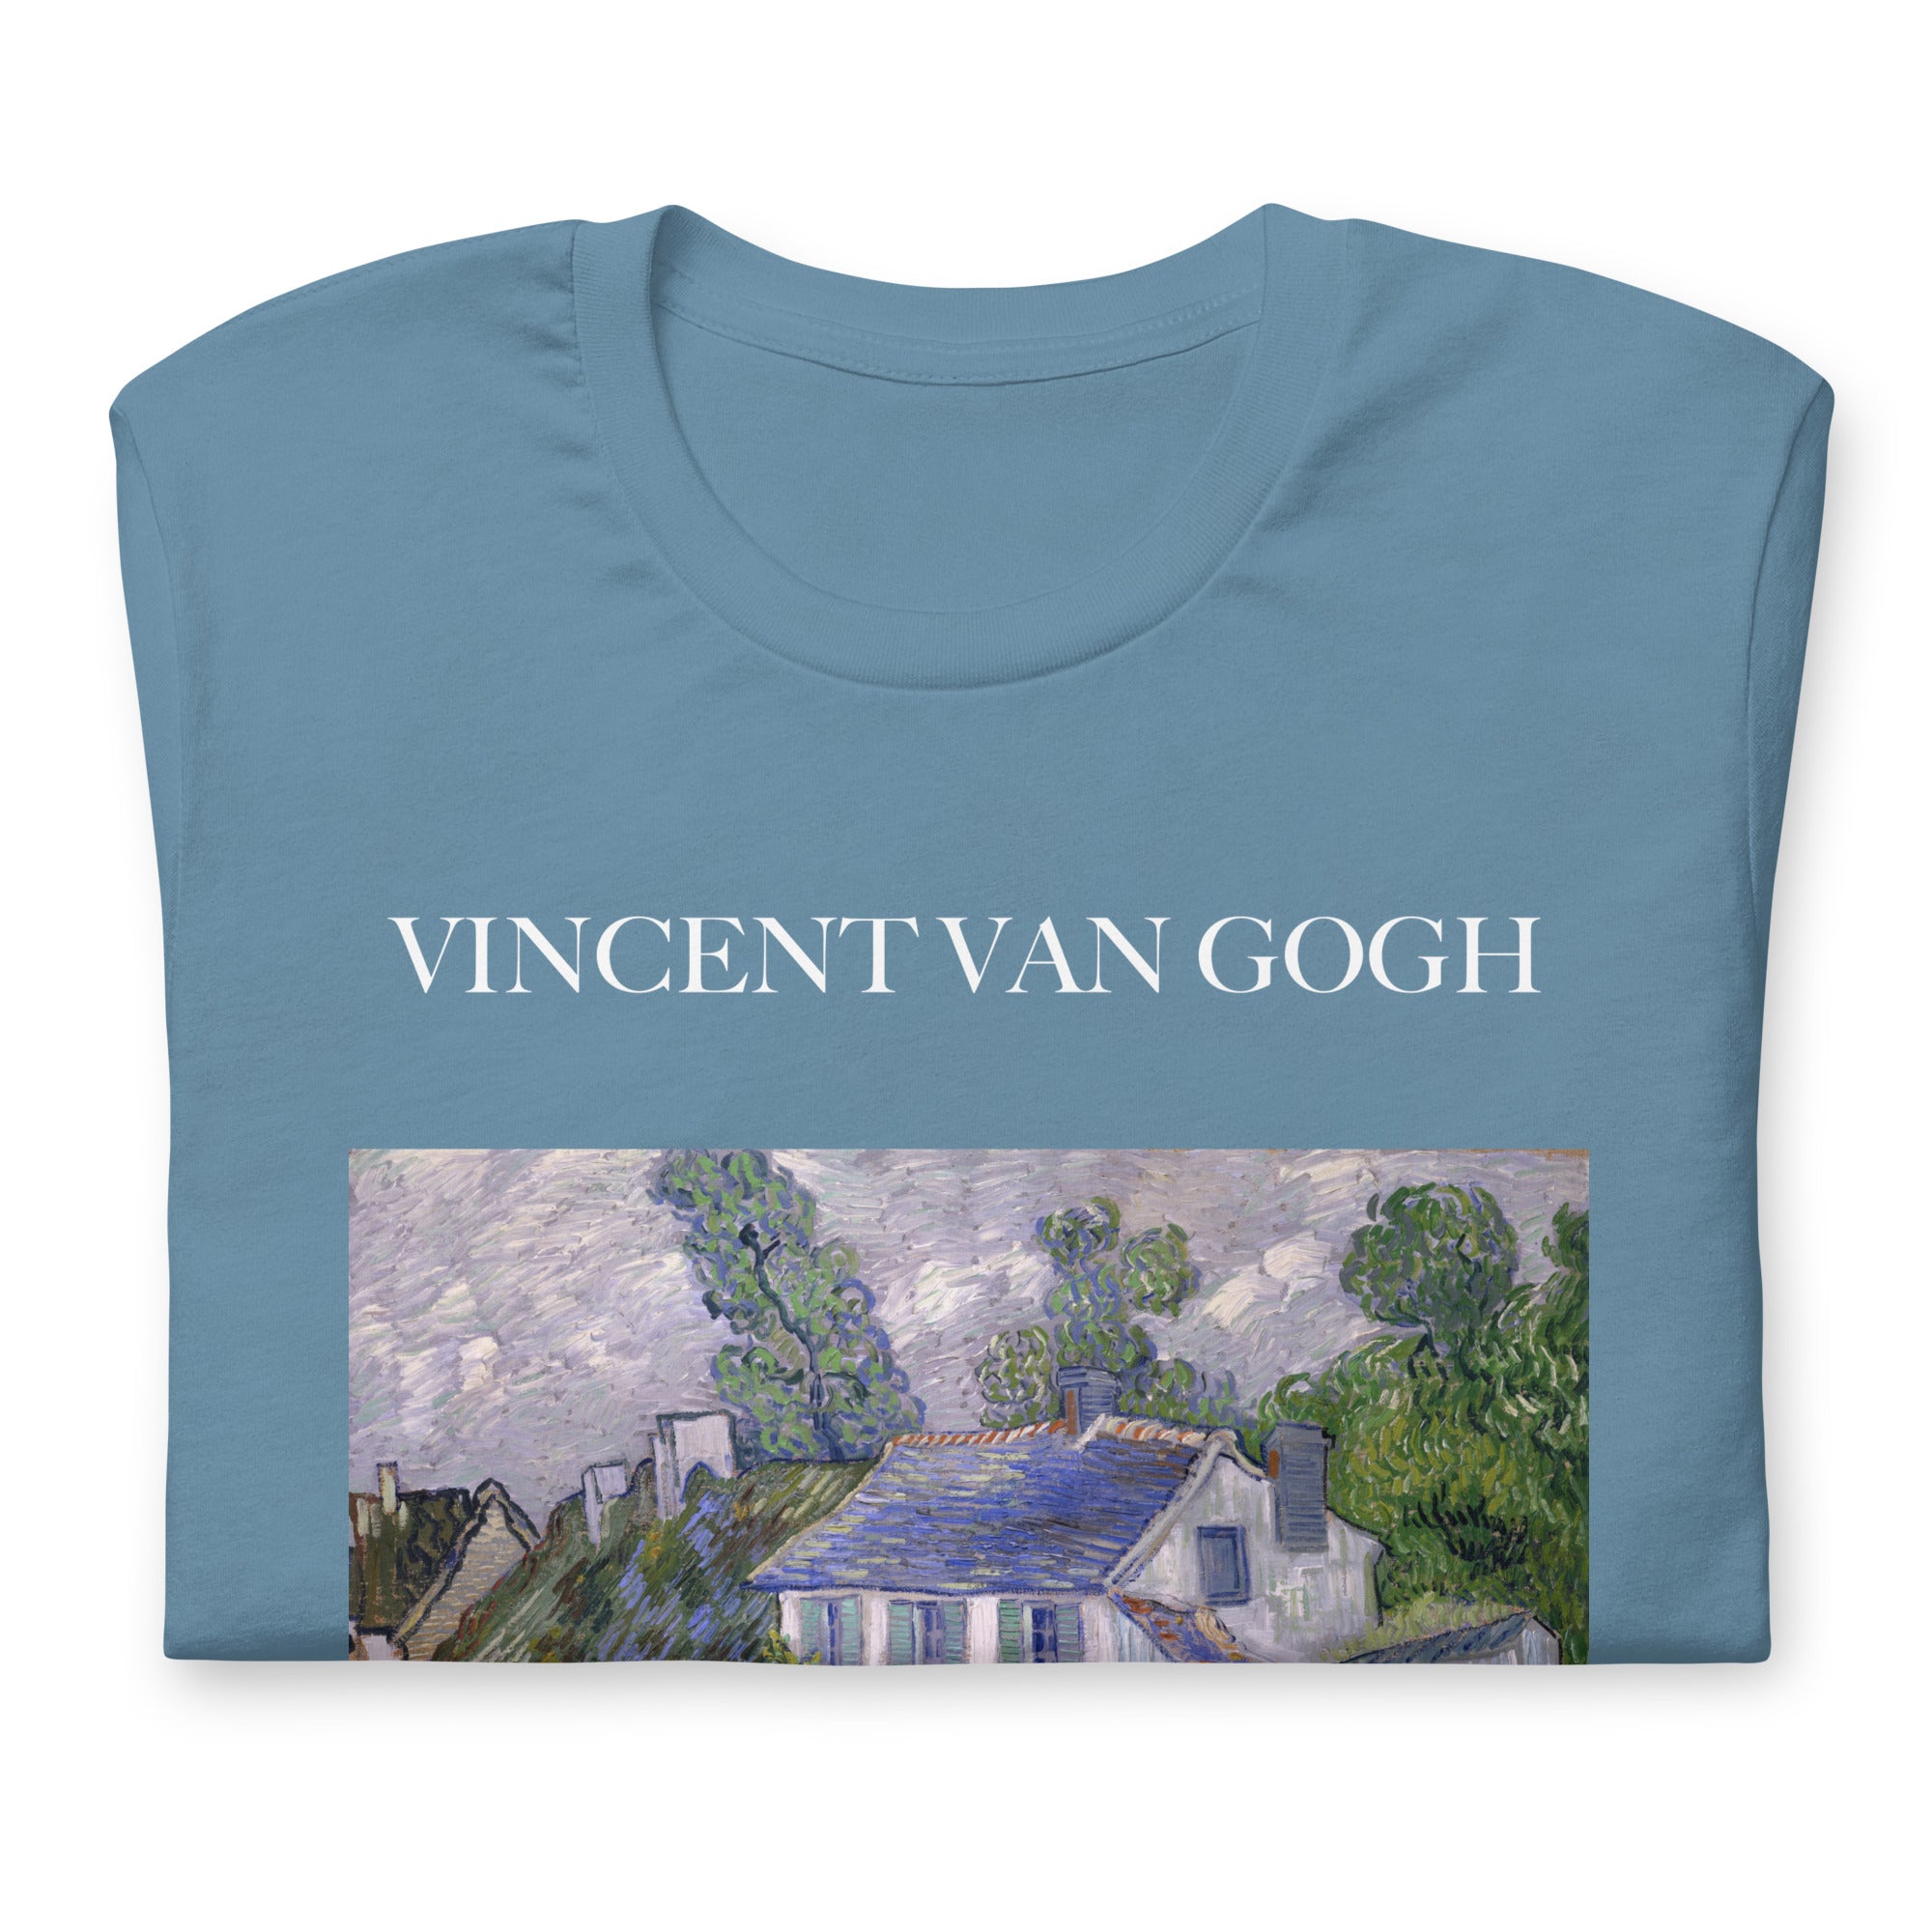 Vincent van Gogh 'Houses at Auvers' Famous Painting T-Shirt | Unisex Classic Art Tee